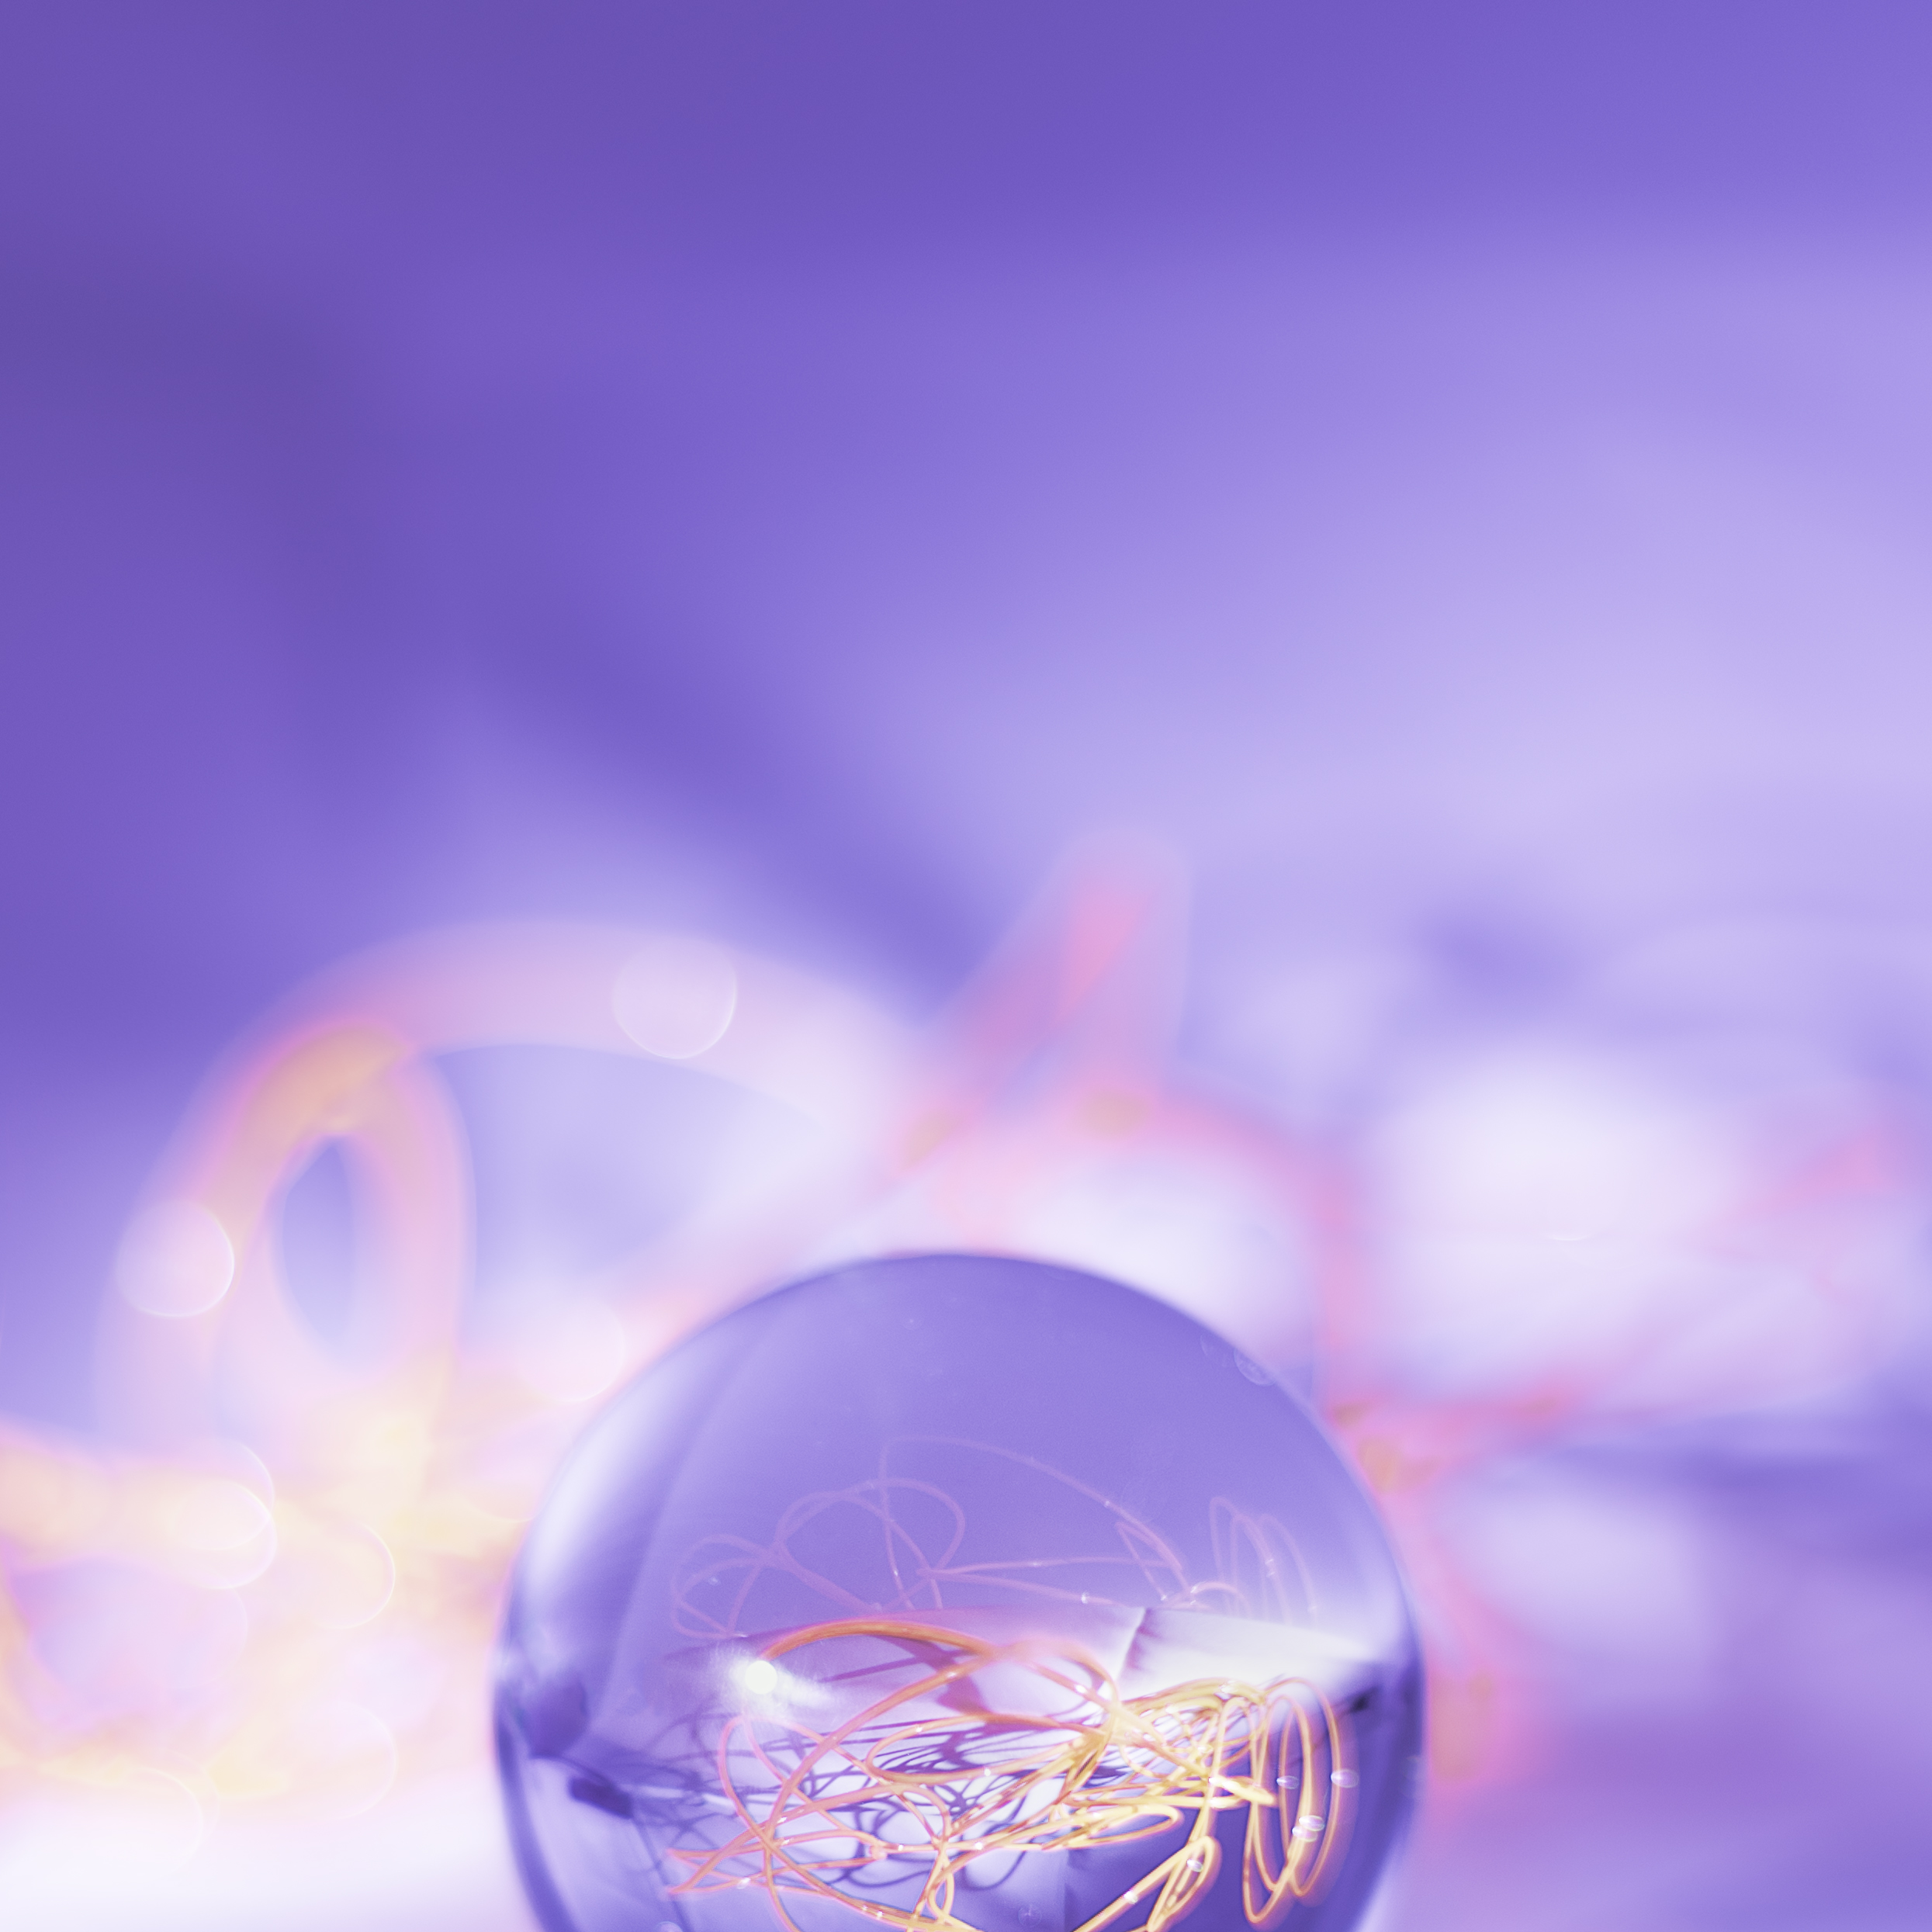 crystal, ball, purple, violet, reflection, macro